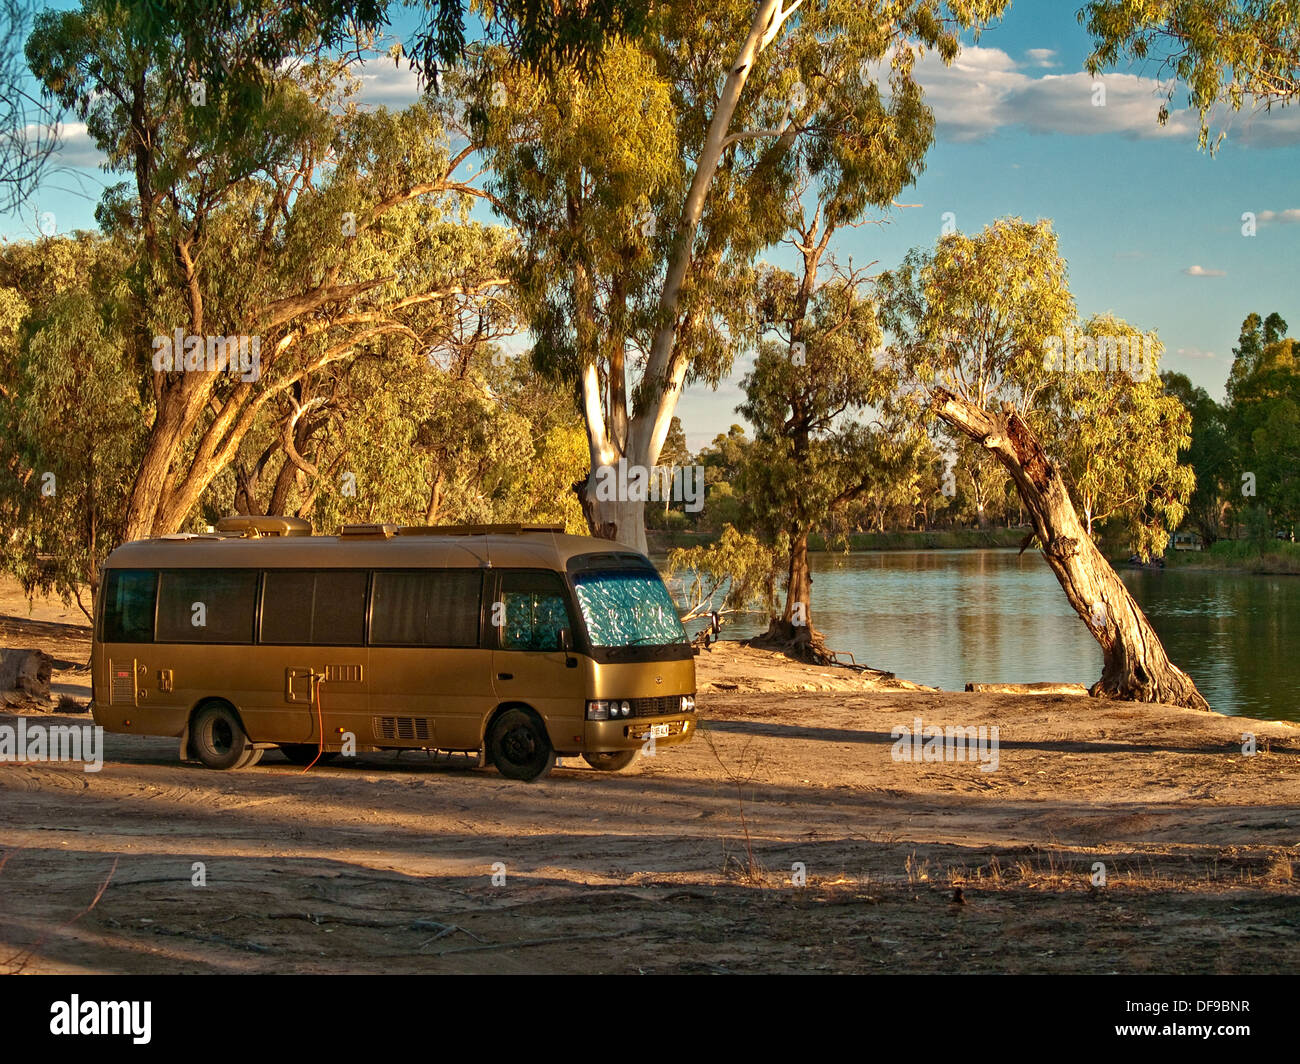 River Murray, Flasche Bend, Mildura, Victoria, Australien Stockfoto